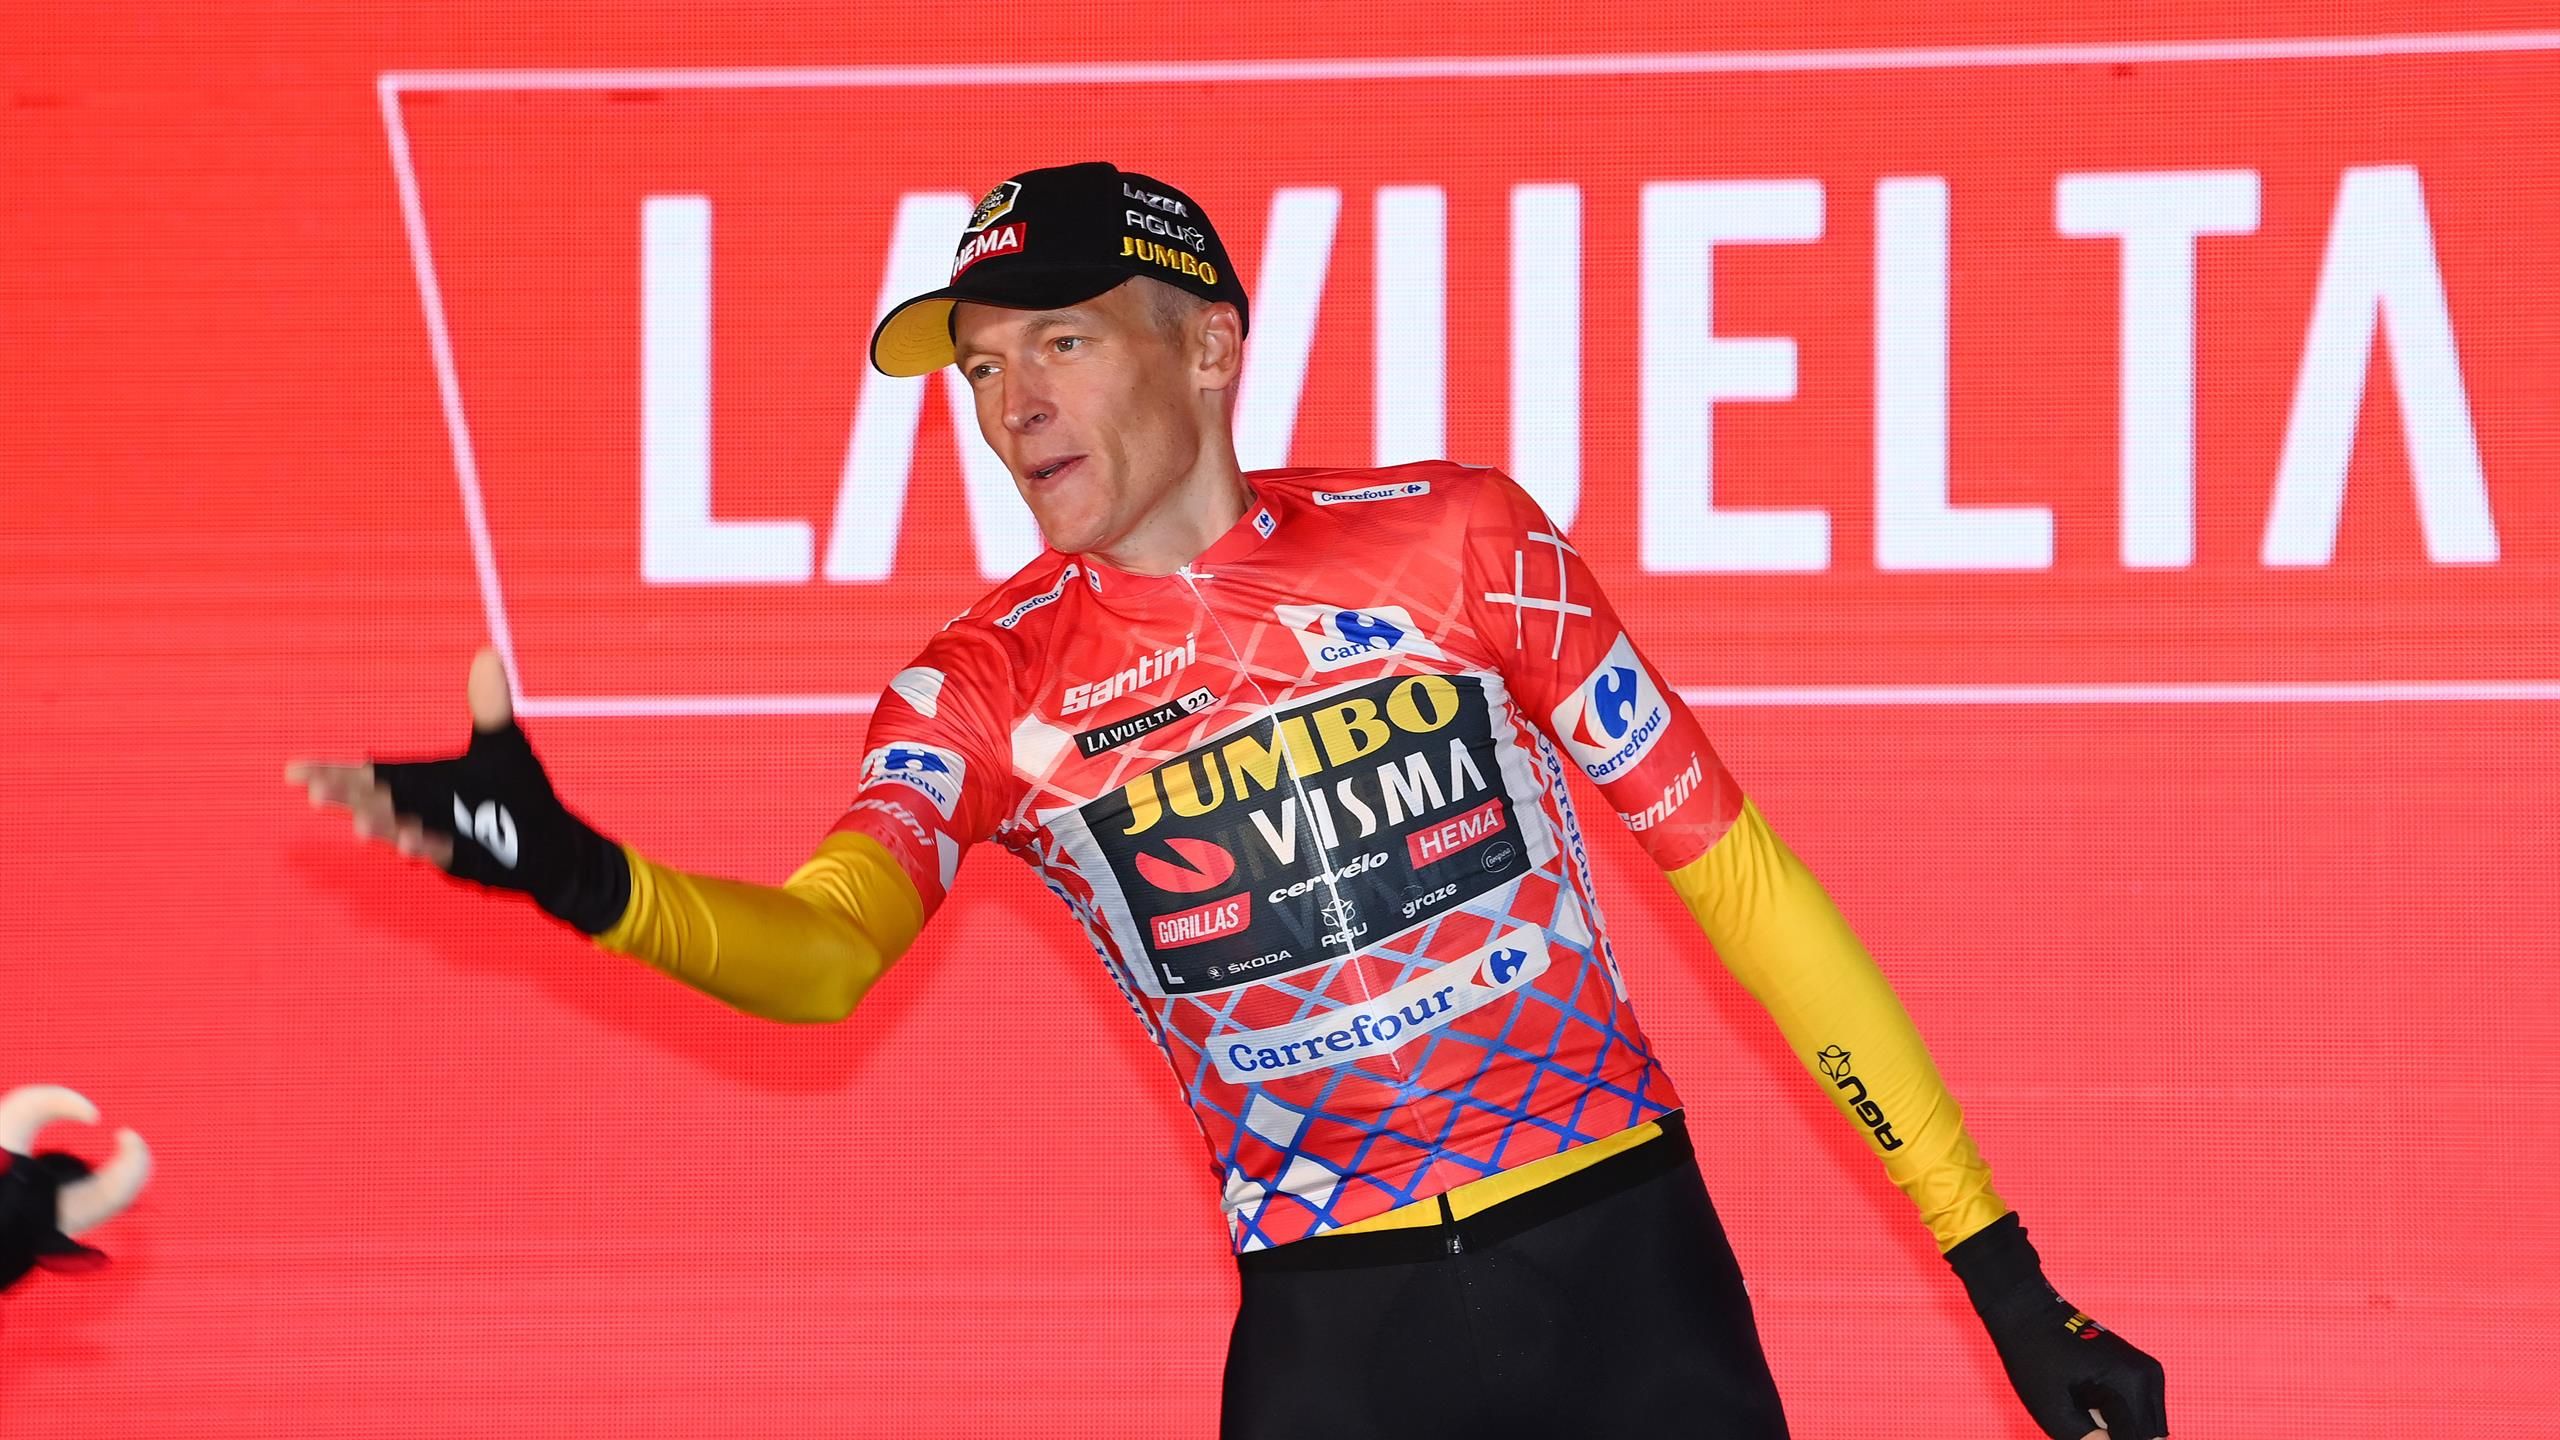 La Vuelta 2022 - Dutch delight in Utrecht as Jumbo-Visma win opening TTT and Robert takes red Eurosport